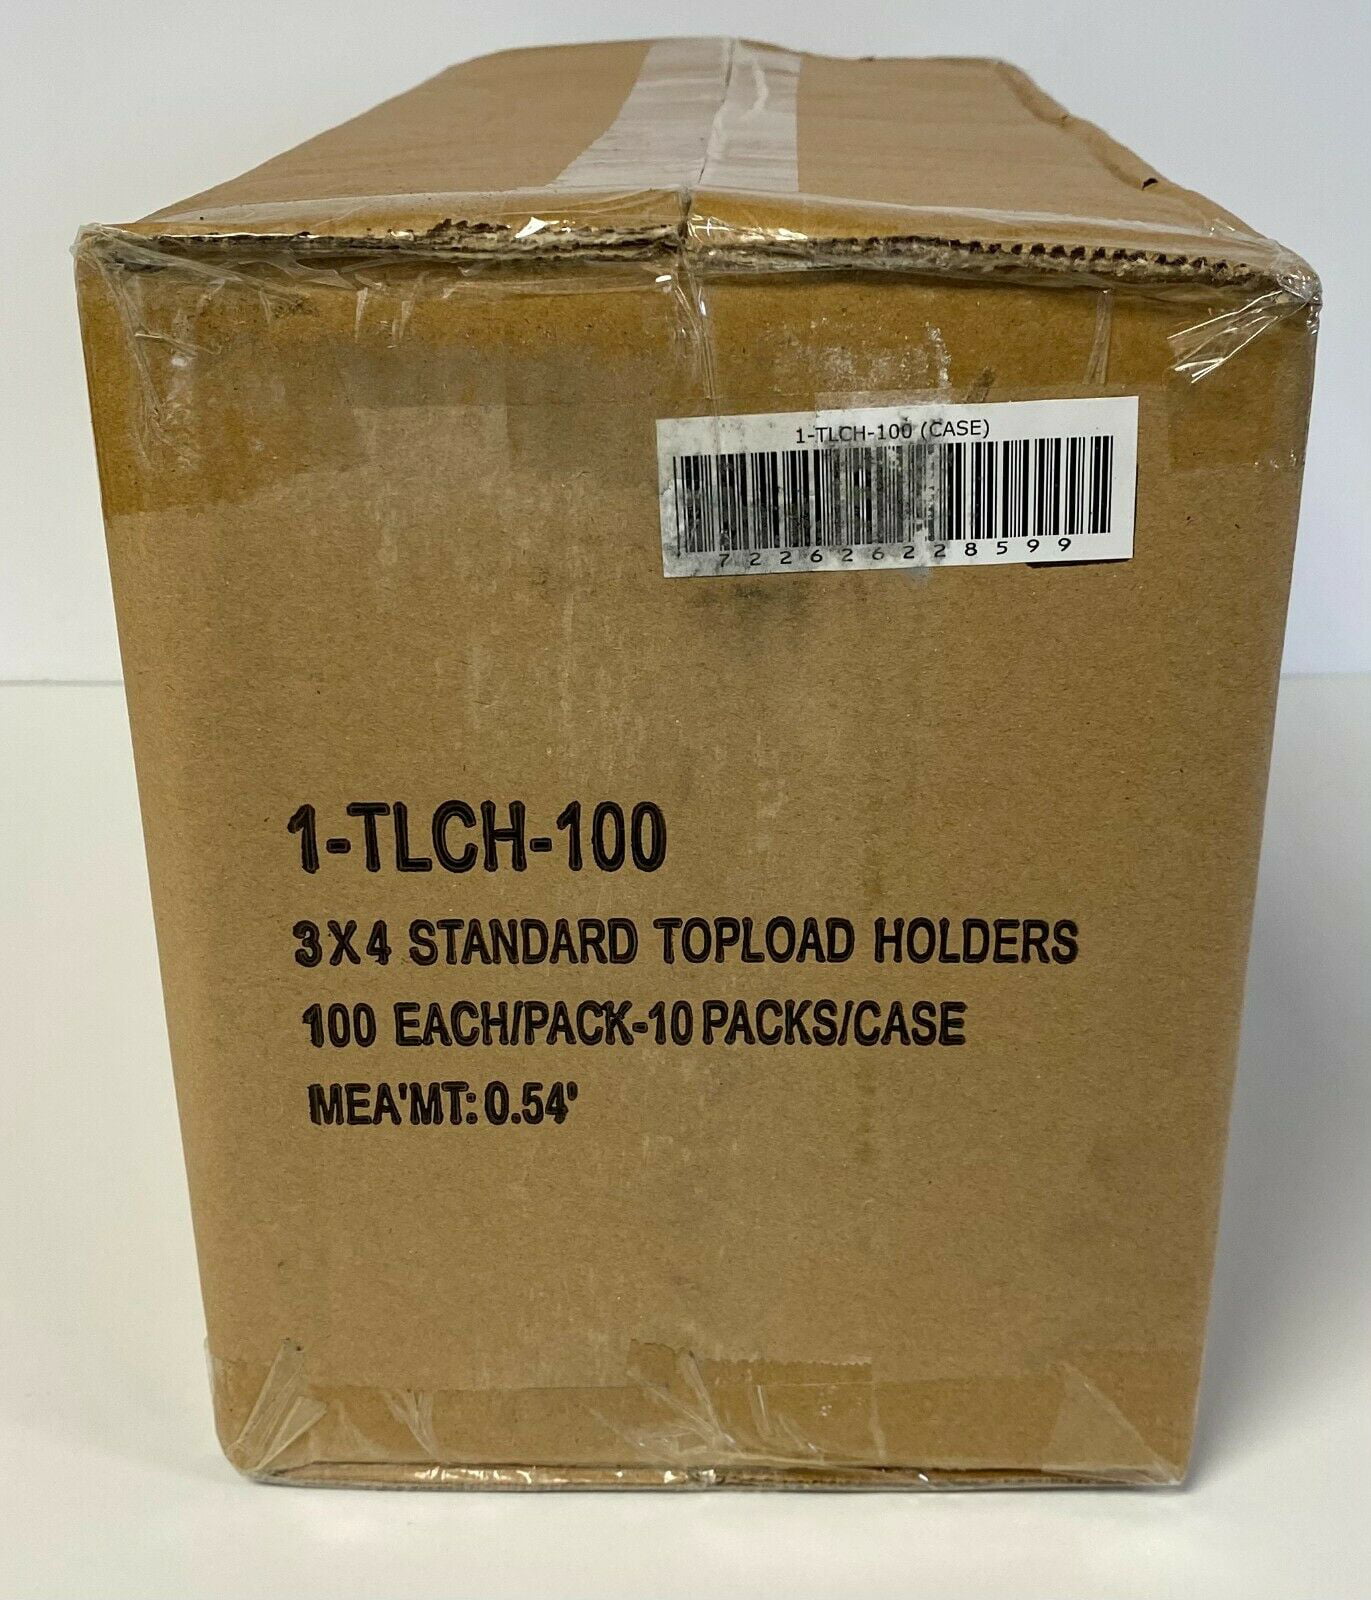 Standard BCW 1-TLCH-100 3X4 Topload Card Holder